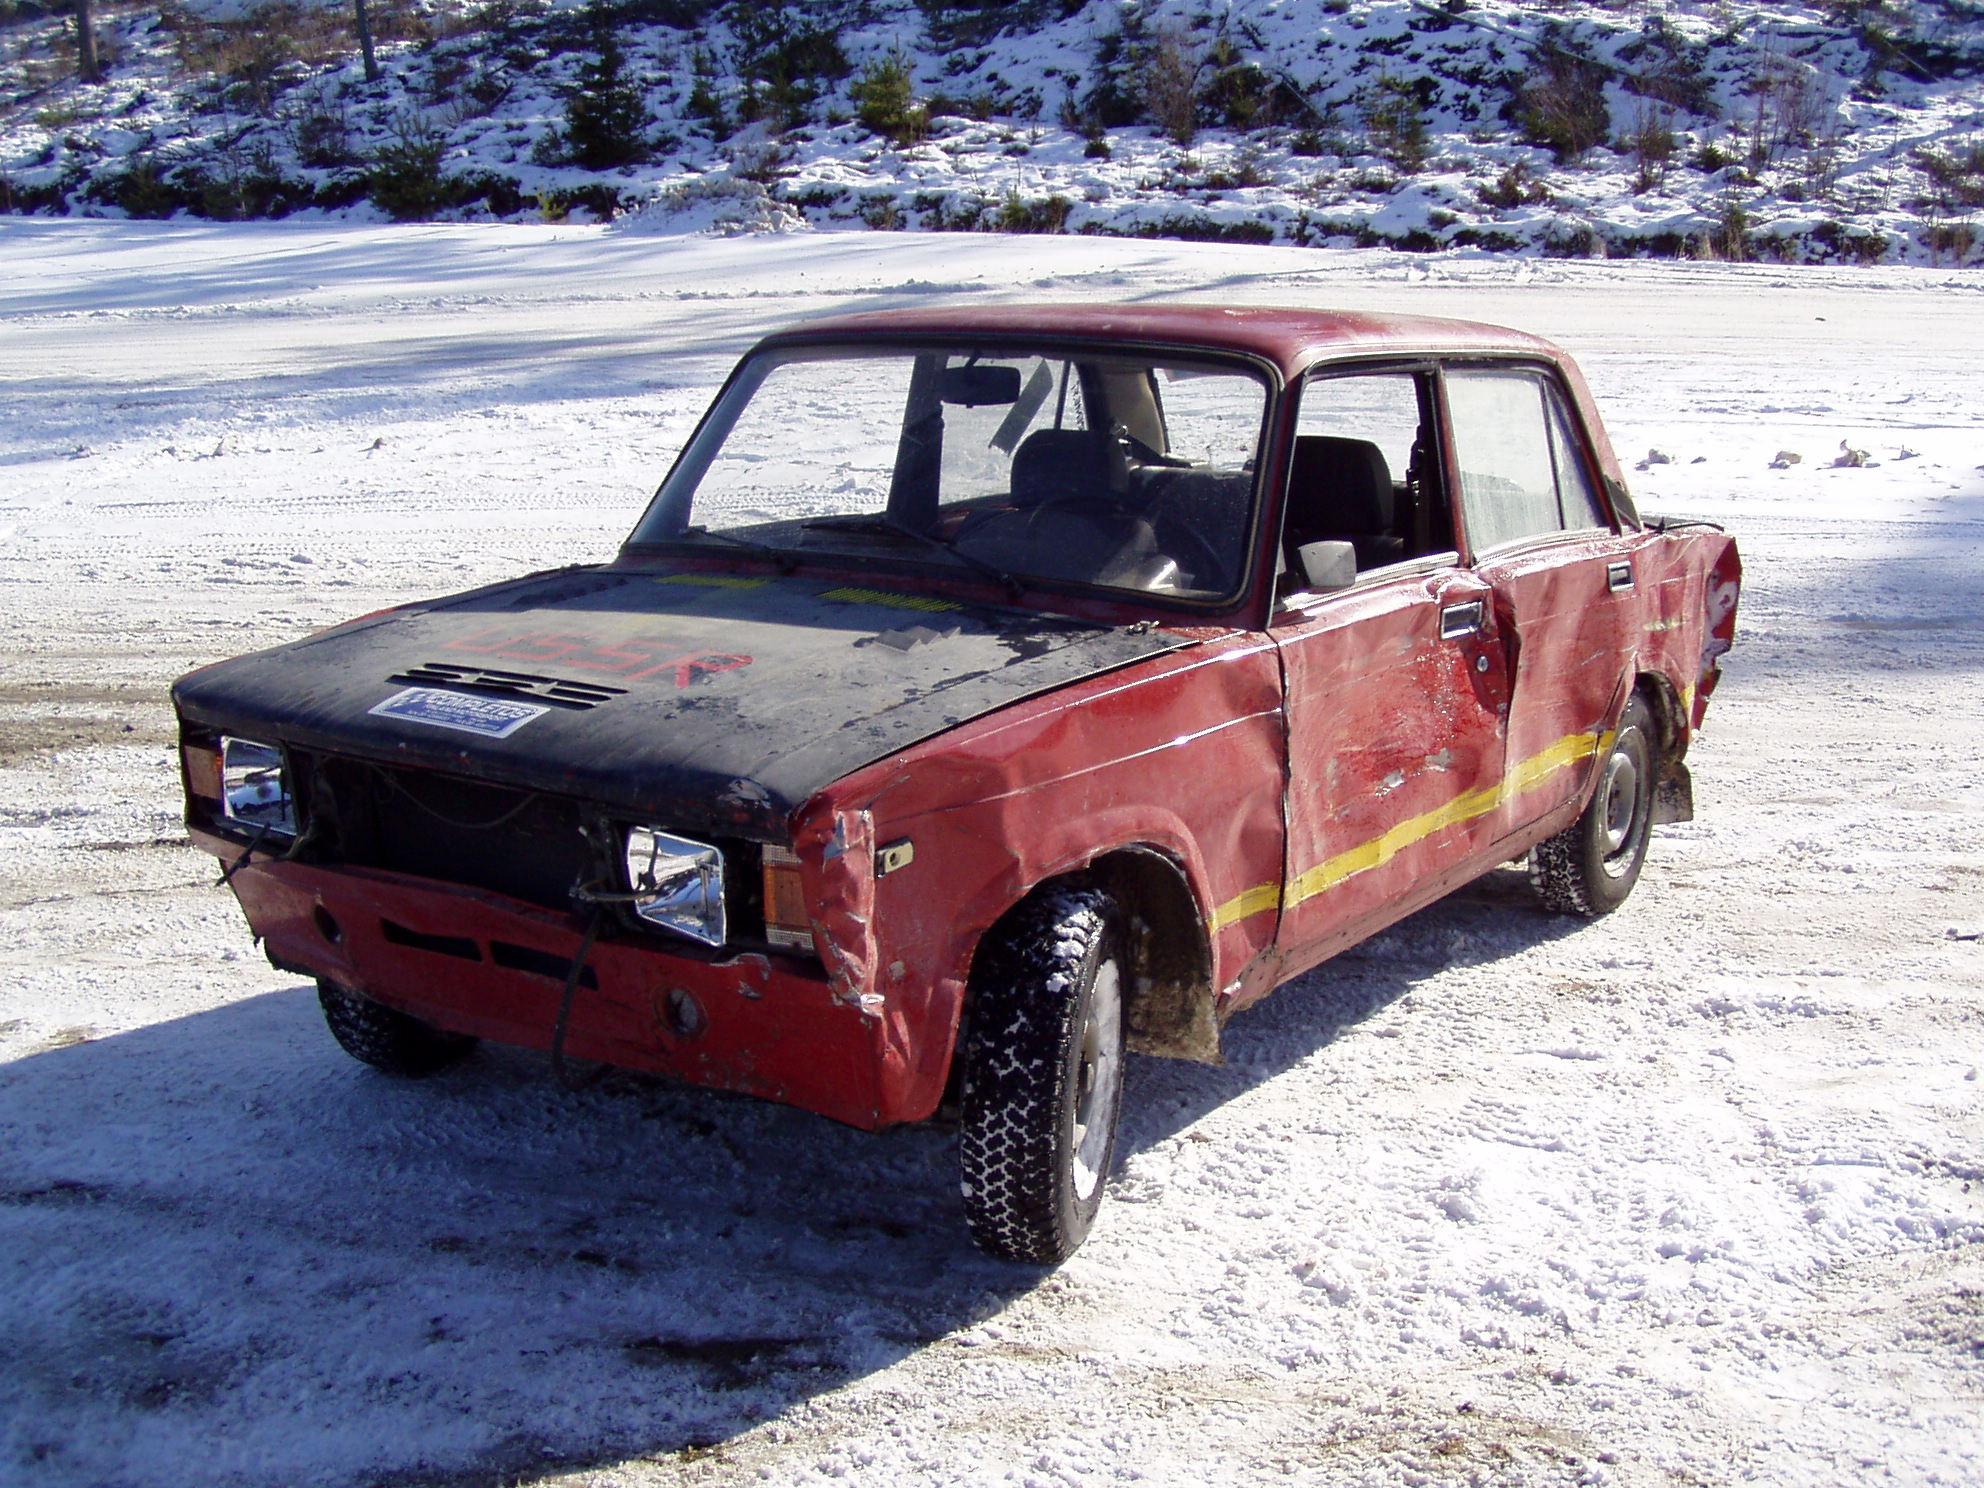 X-Treme talviajot 19.3.2005, Punainen Lada